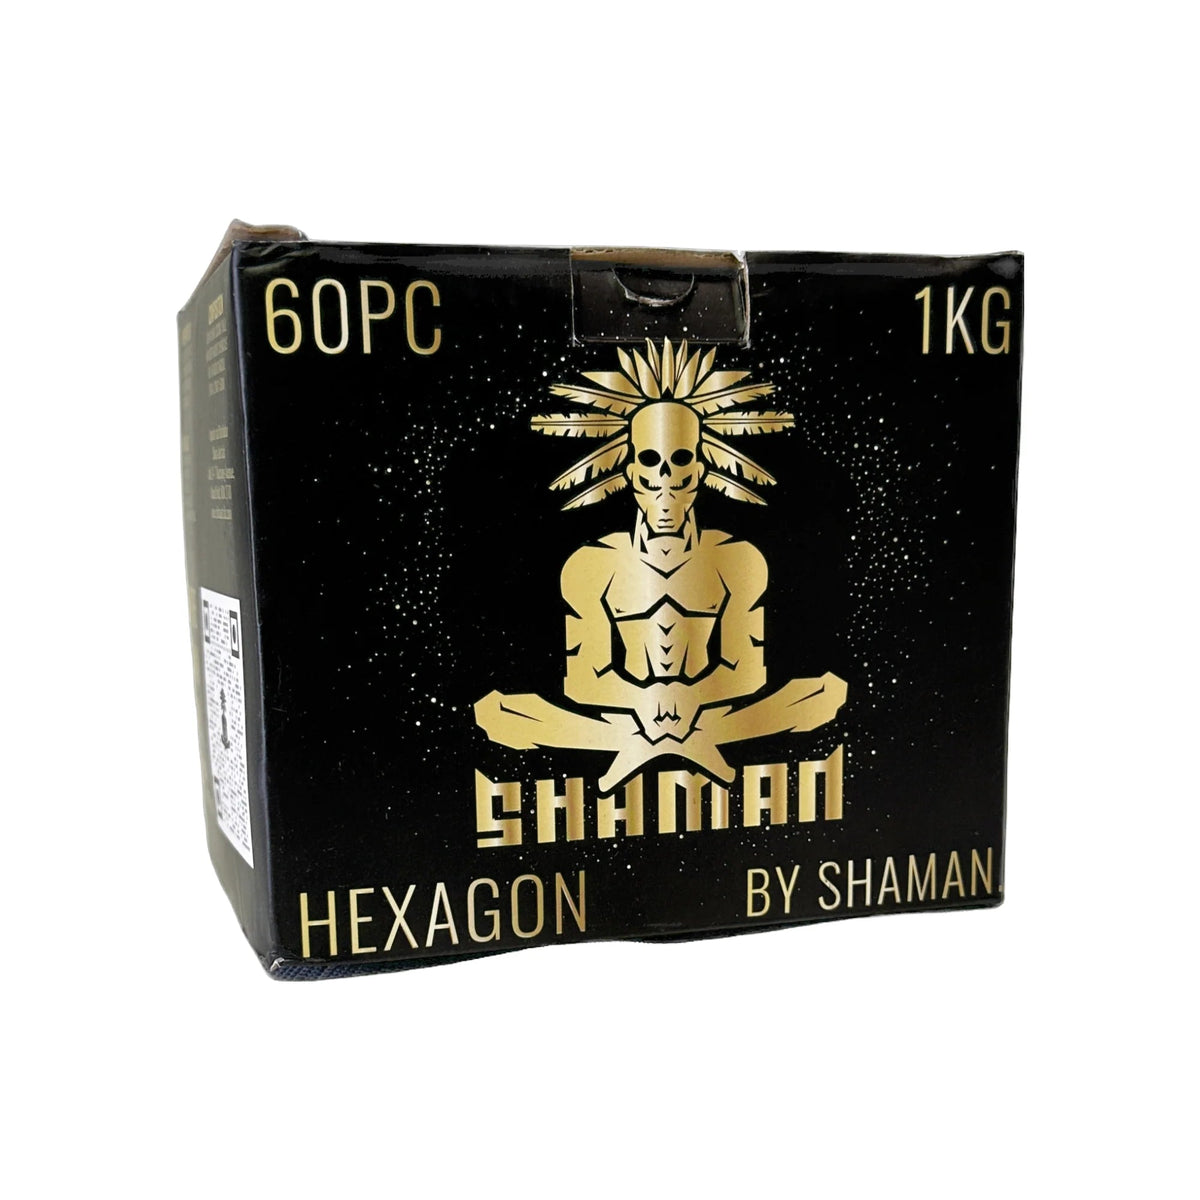 Shaman Coal Hexagon 1kg Value Pack - 3 - - Crown Hookah